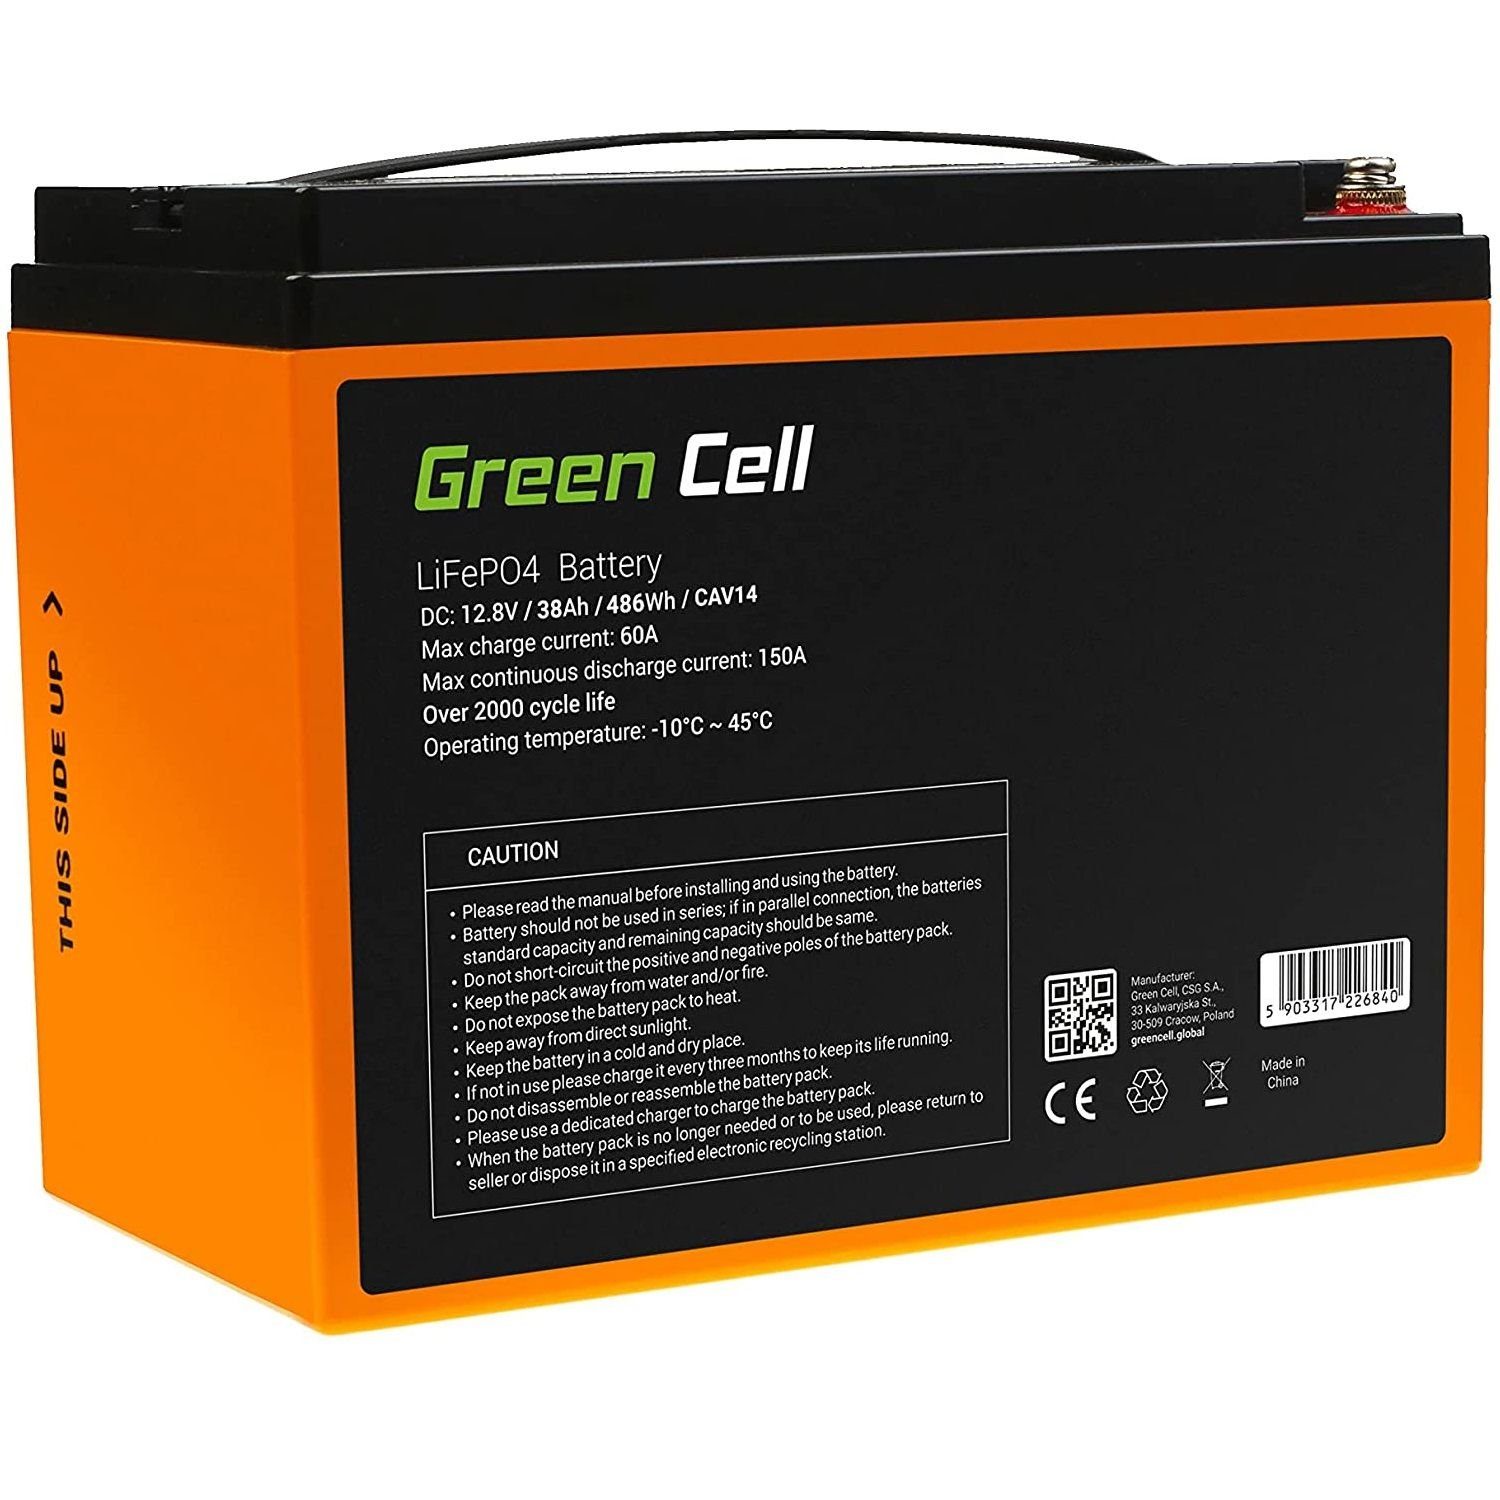 Cell 38 Spannung Batterie, 150A Ah 12.8V, (12.8 V), Green Lithium-Eisen-Phosphat-Akku LiFePO4 Wh Spitzenentladestrom: 486 Battery